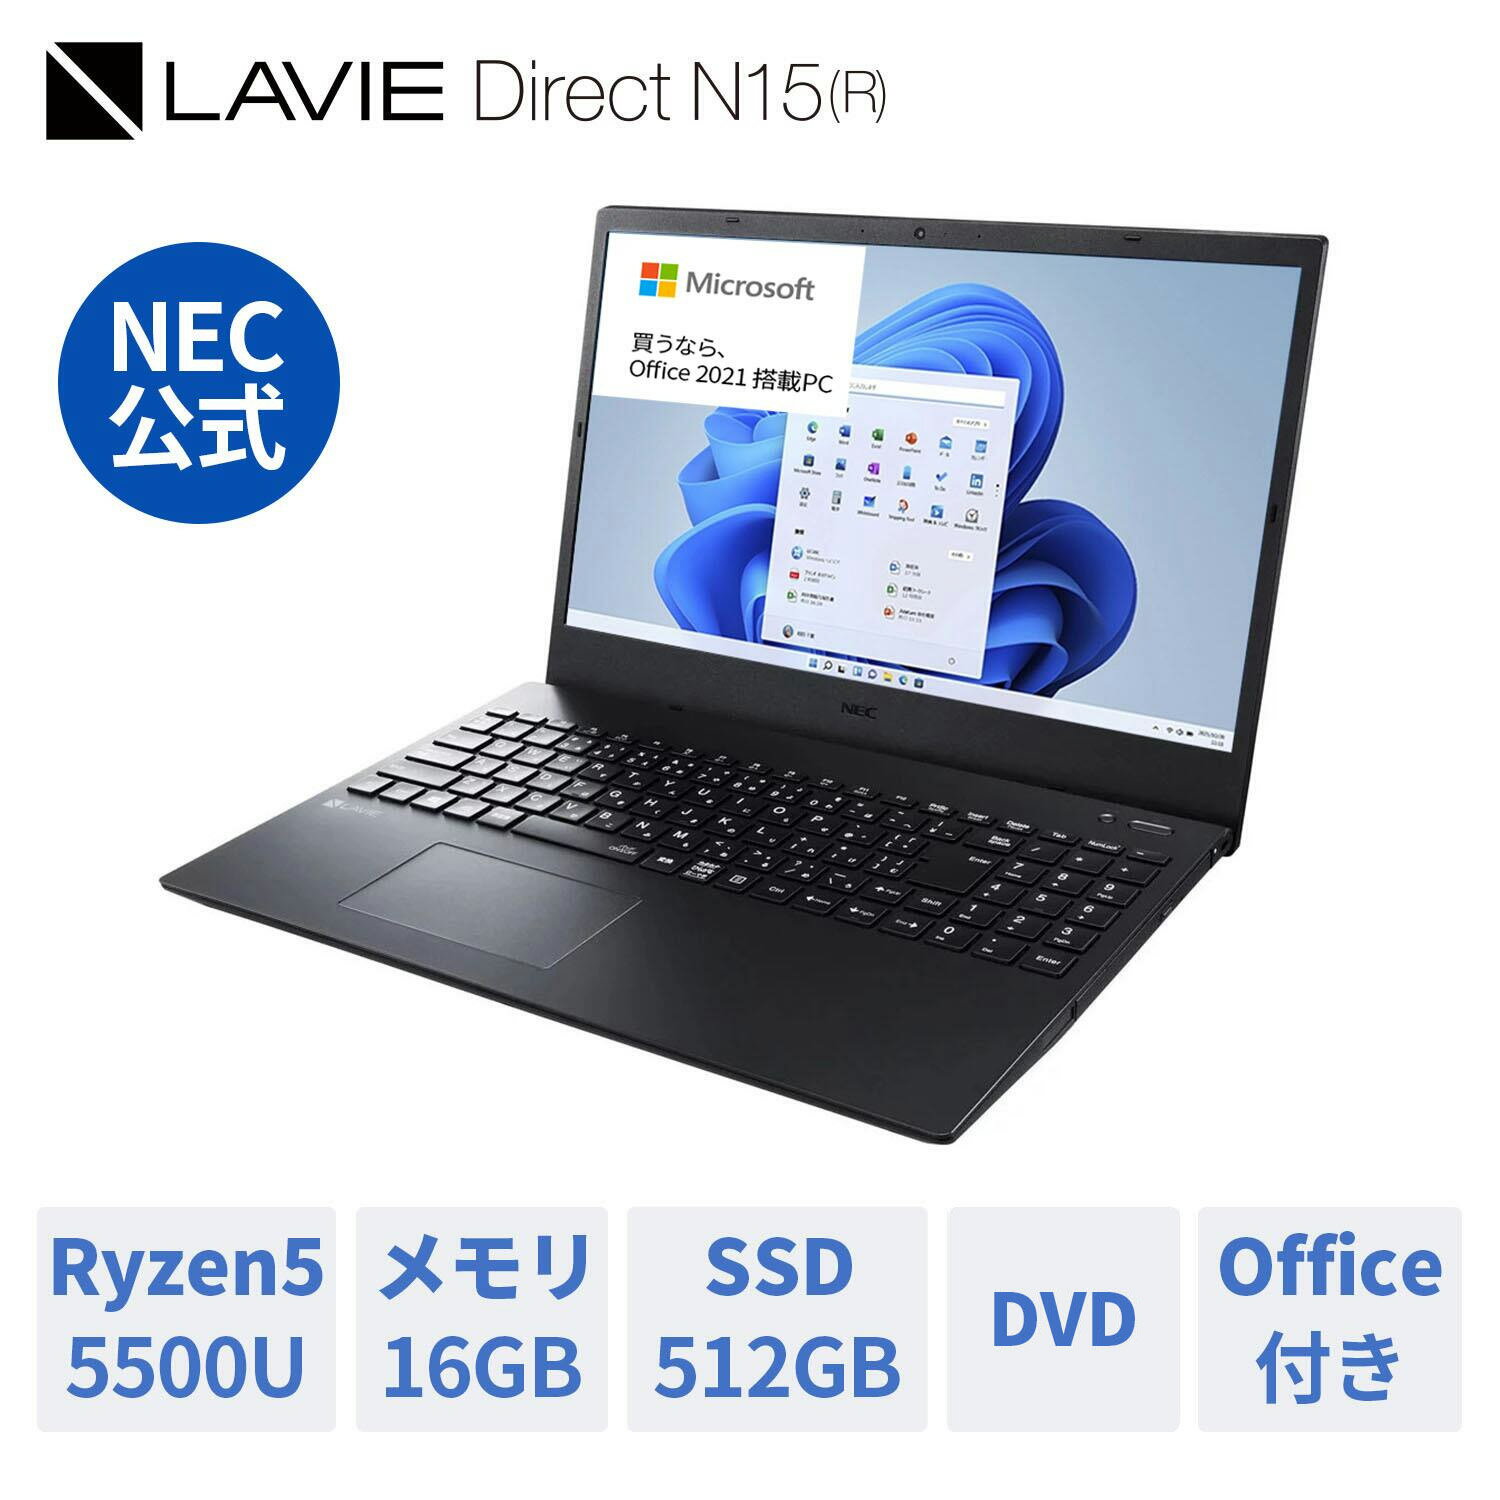 【DEAL10%】【公式】 新品 NEC ノートパソコン office付き LAVIE Direct N15 (R) 15.6インチ Windows 11 Home AMD Ryzen 5-5500U メモリ 16GB 512GB SSD DVD 1年保証 送料無料 人気商品 【Norton2】 yxe